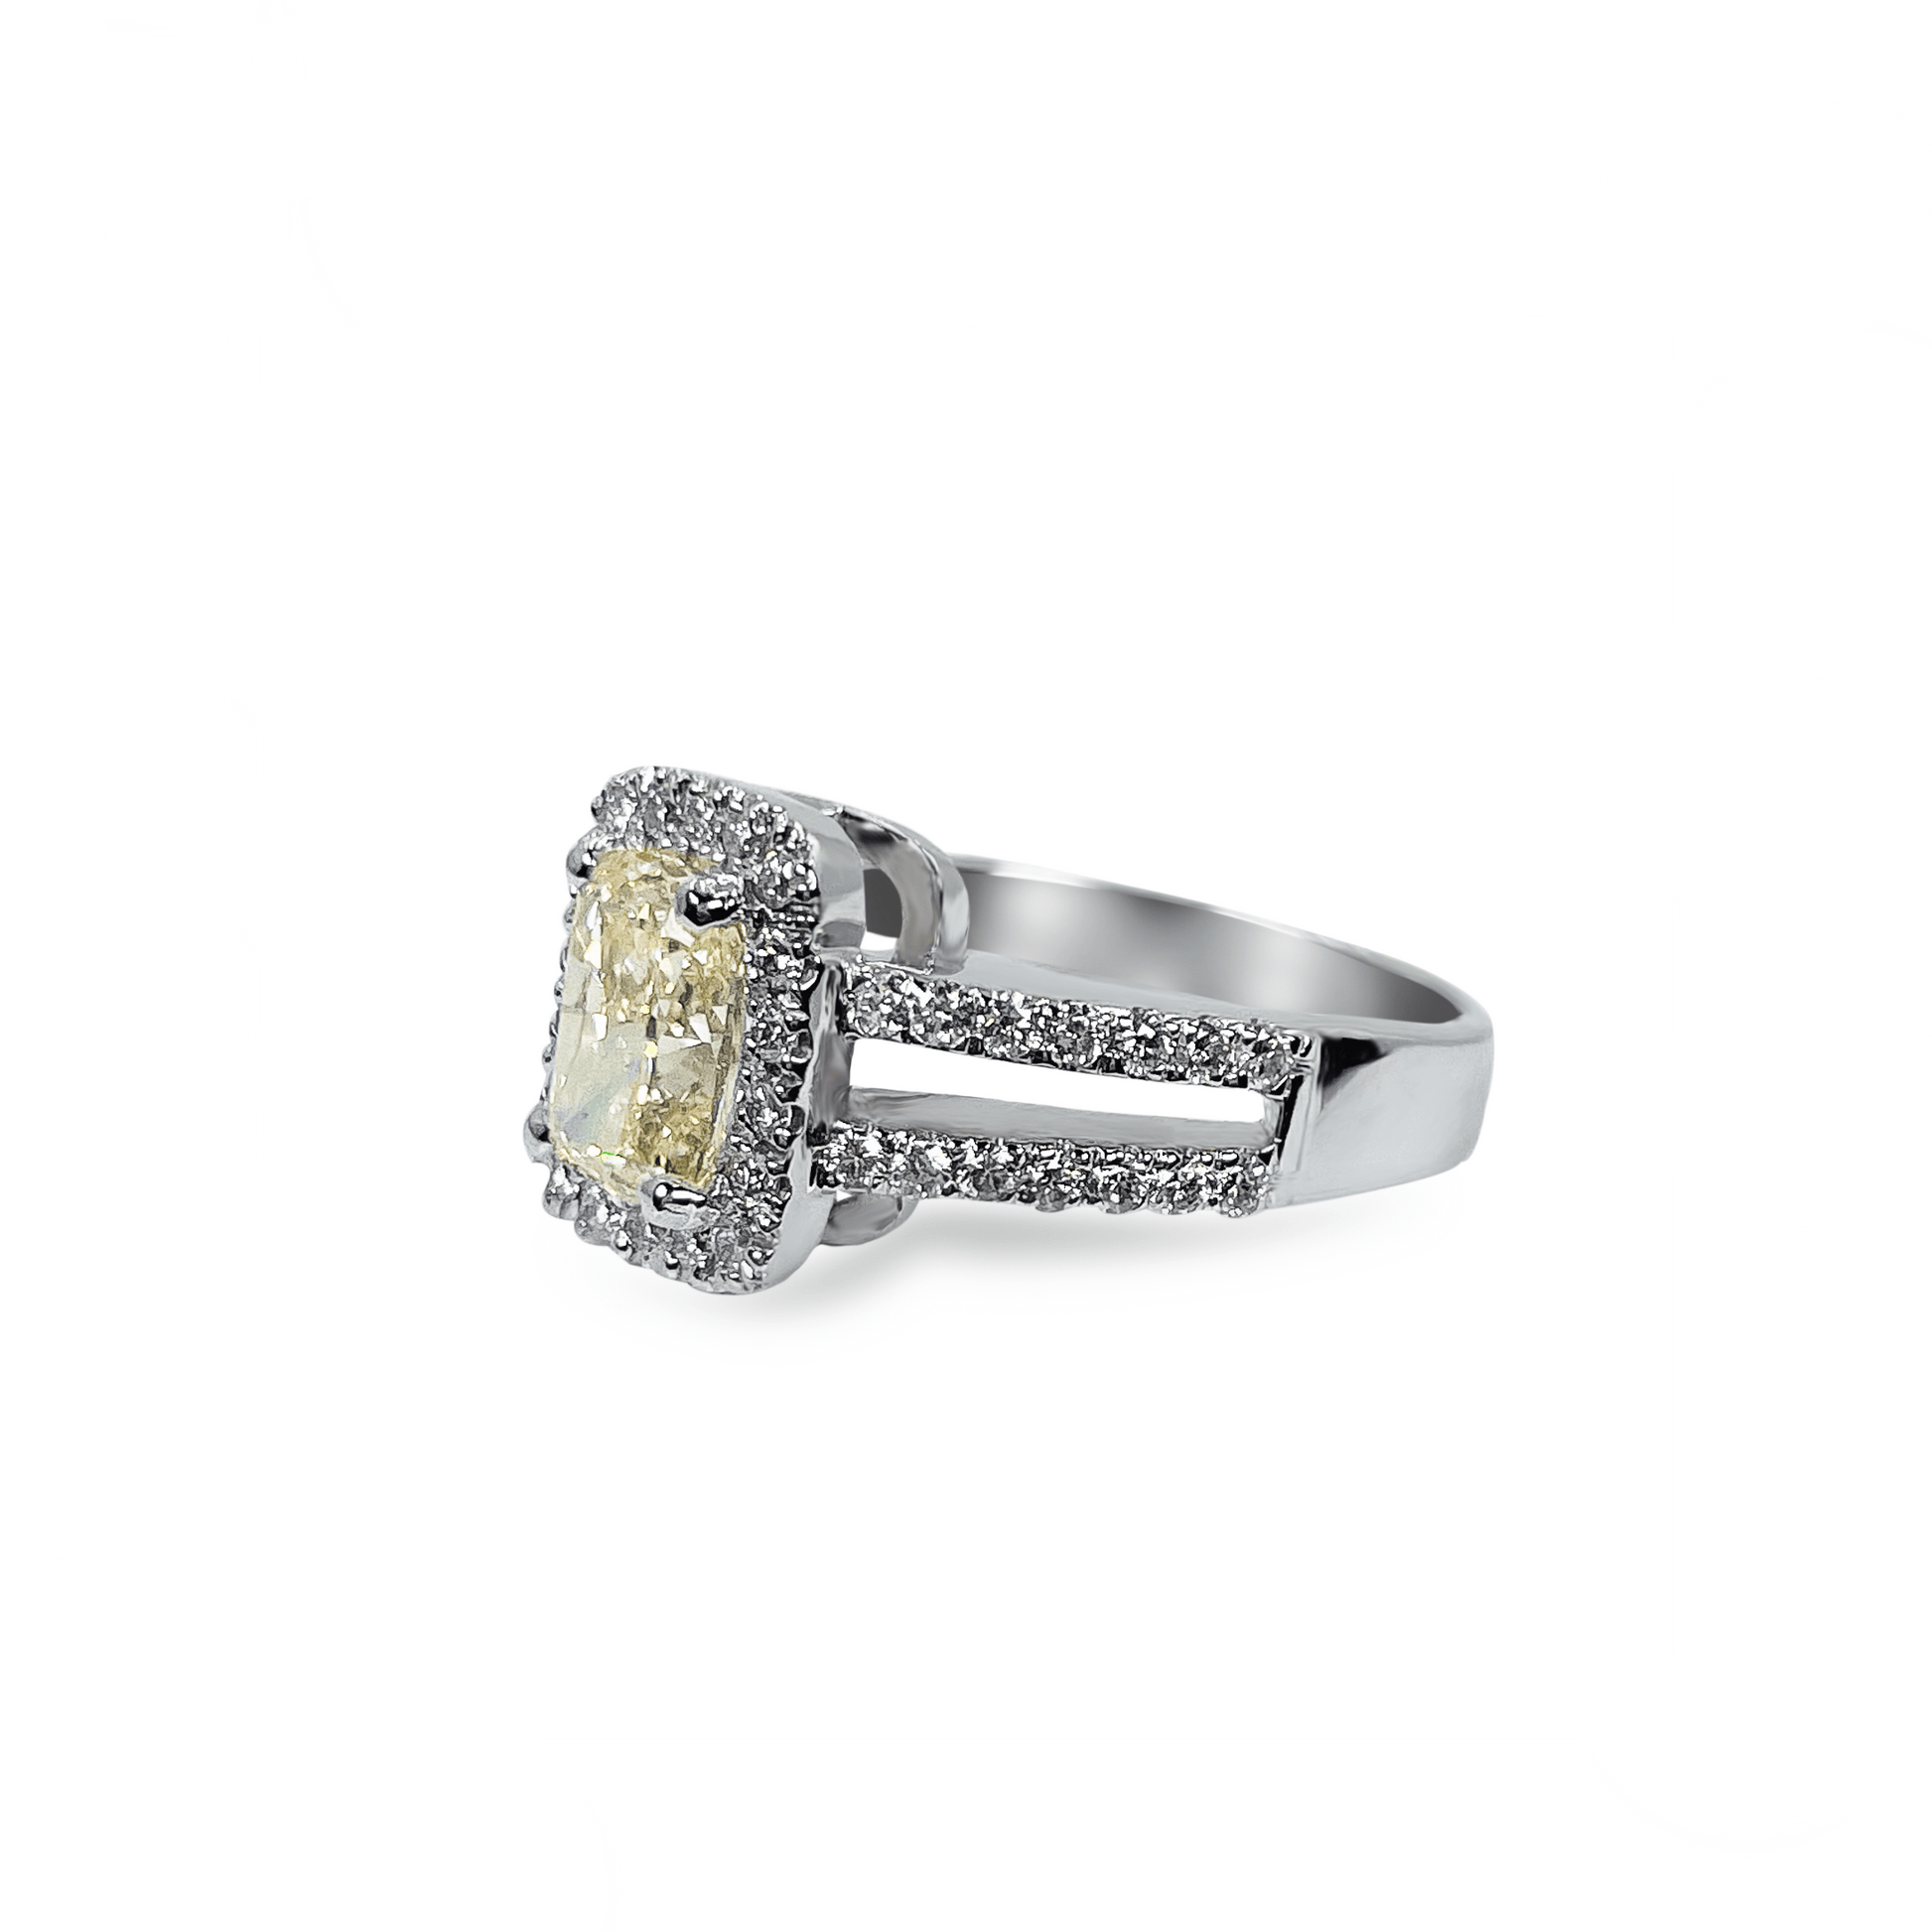 1.52ct Cushion Cut Light Yellow Diamond With Diamond Halo in 18k White Gold- جرس - Luxury Diamond Jewelry shop Dubai - SABA DIAMONDS